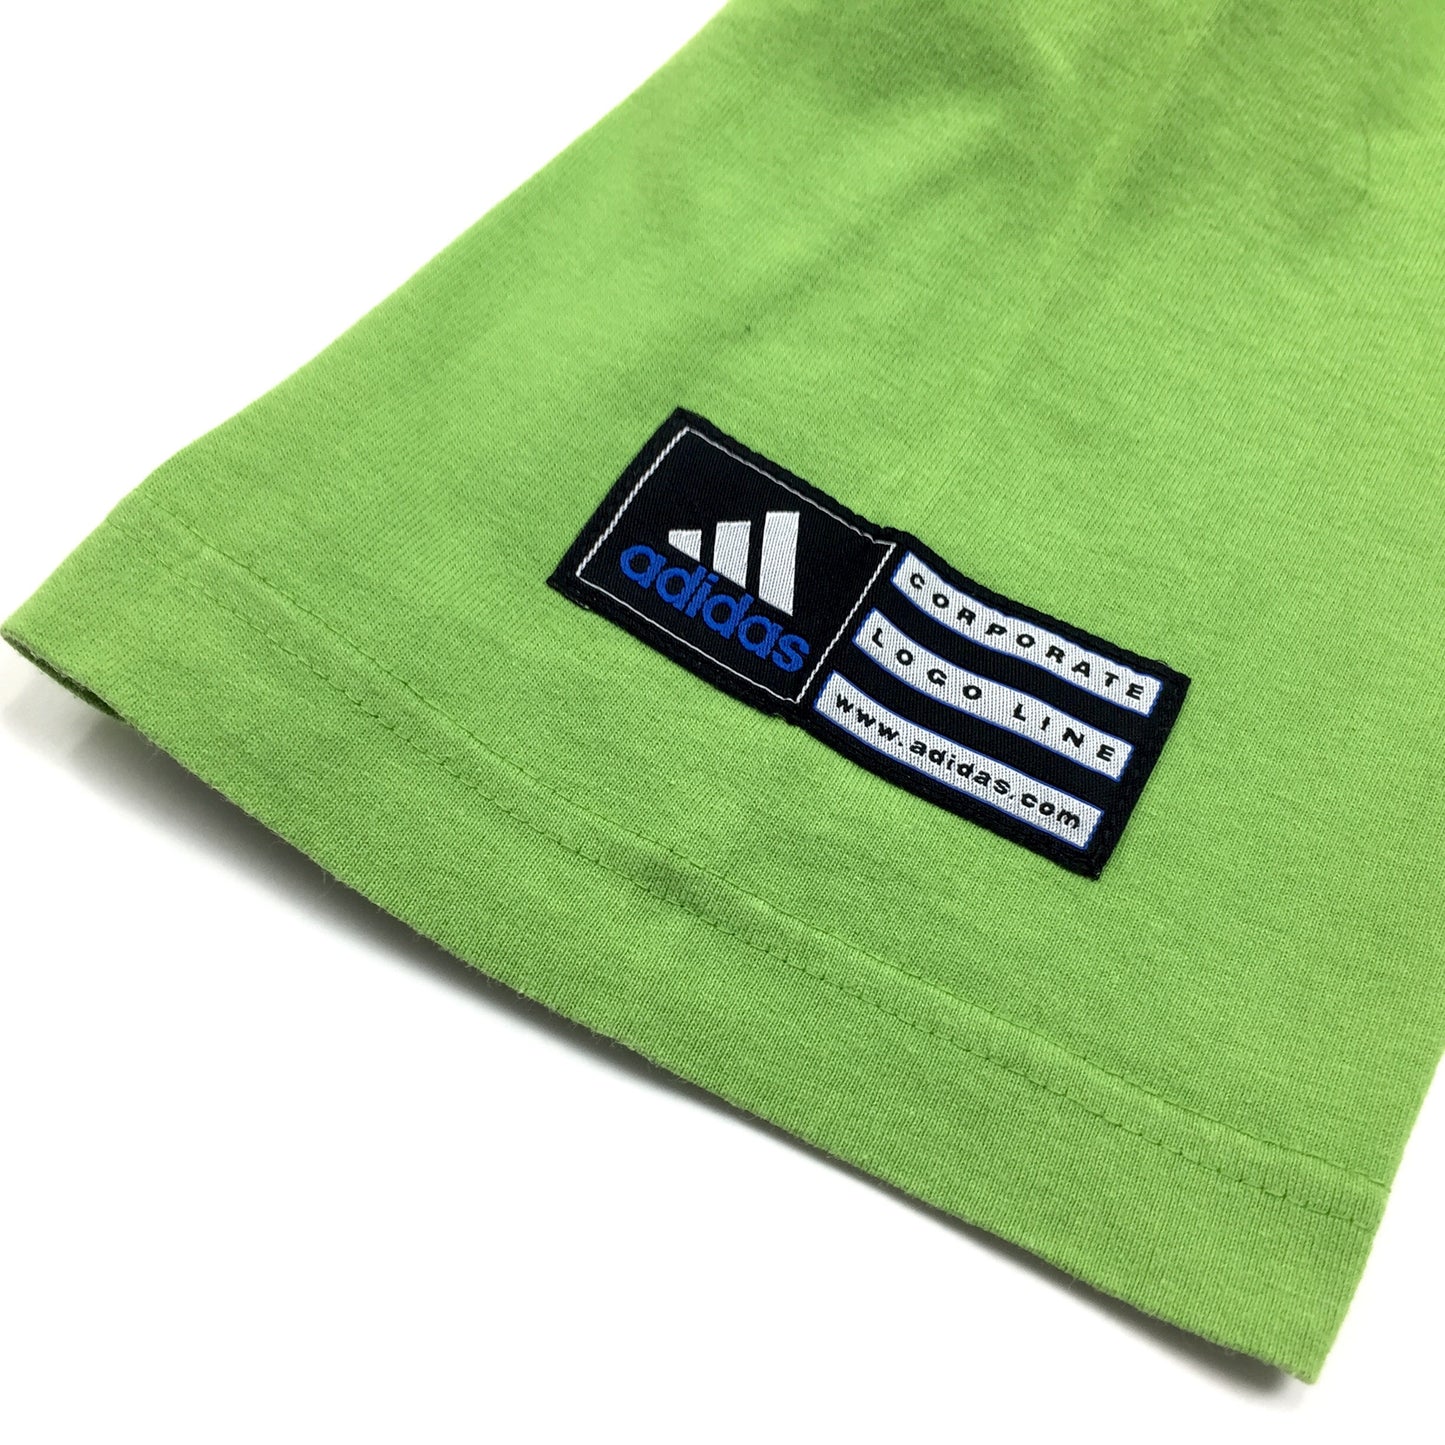 0299 Adidas Vintage Logo T-Shirt